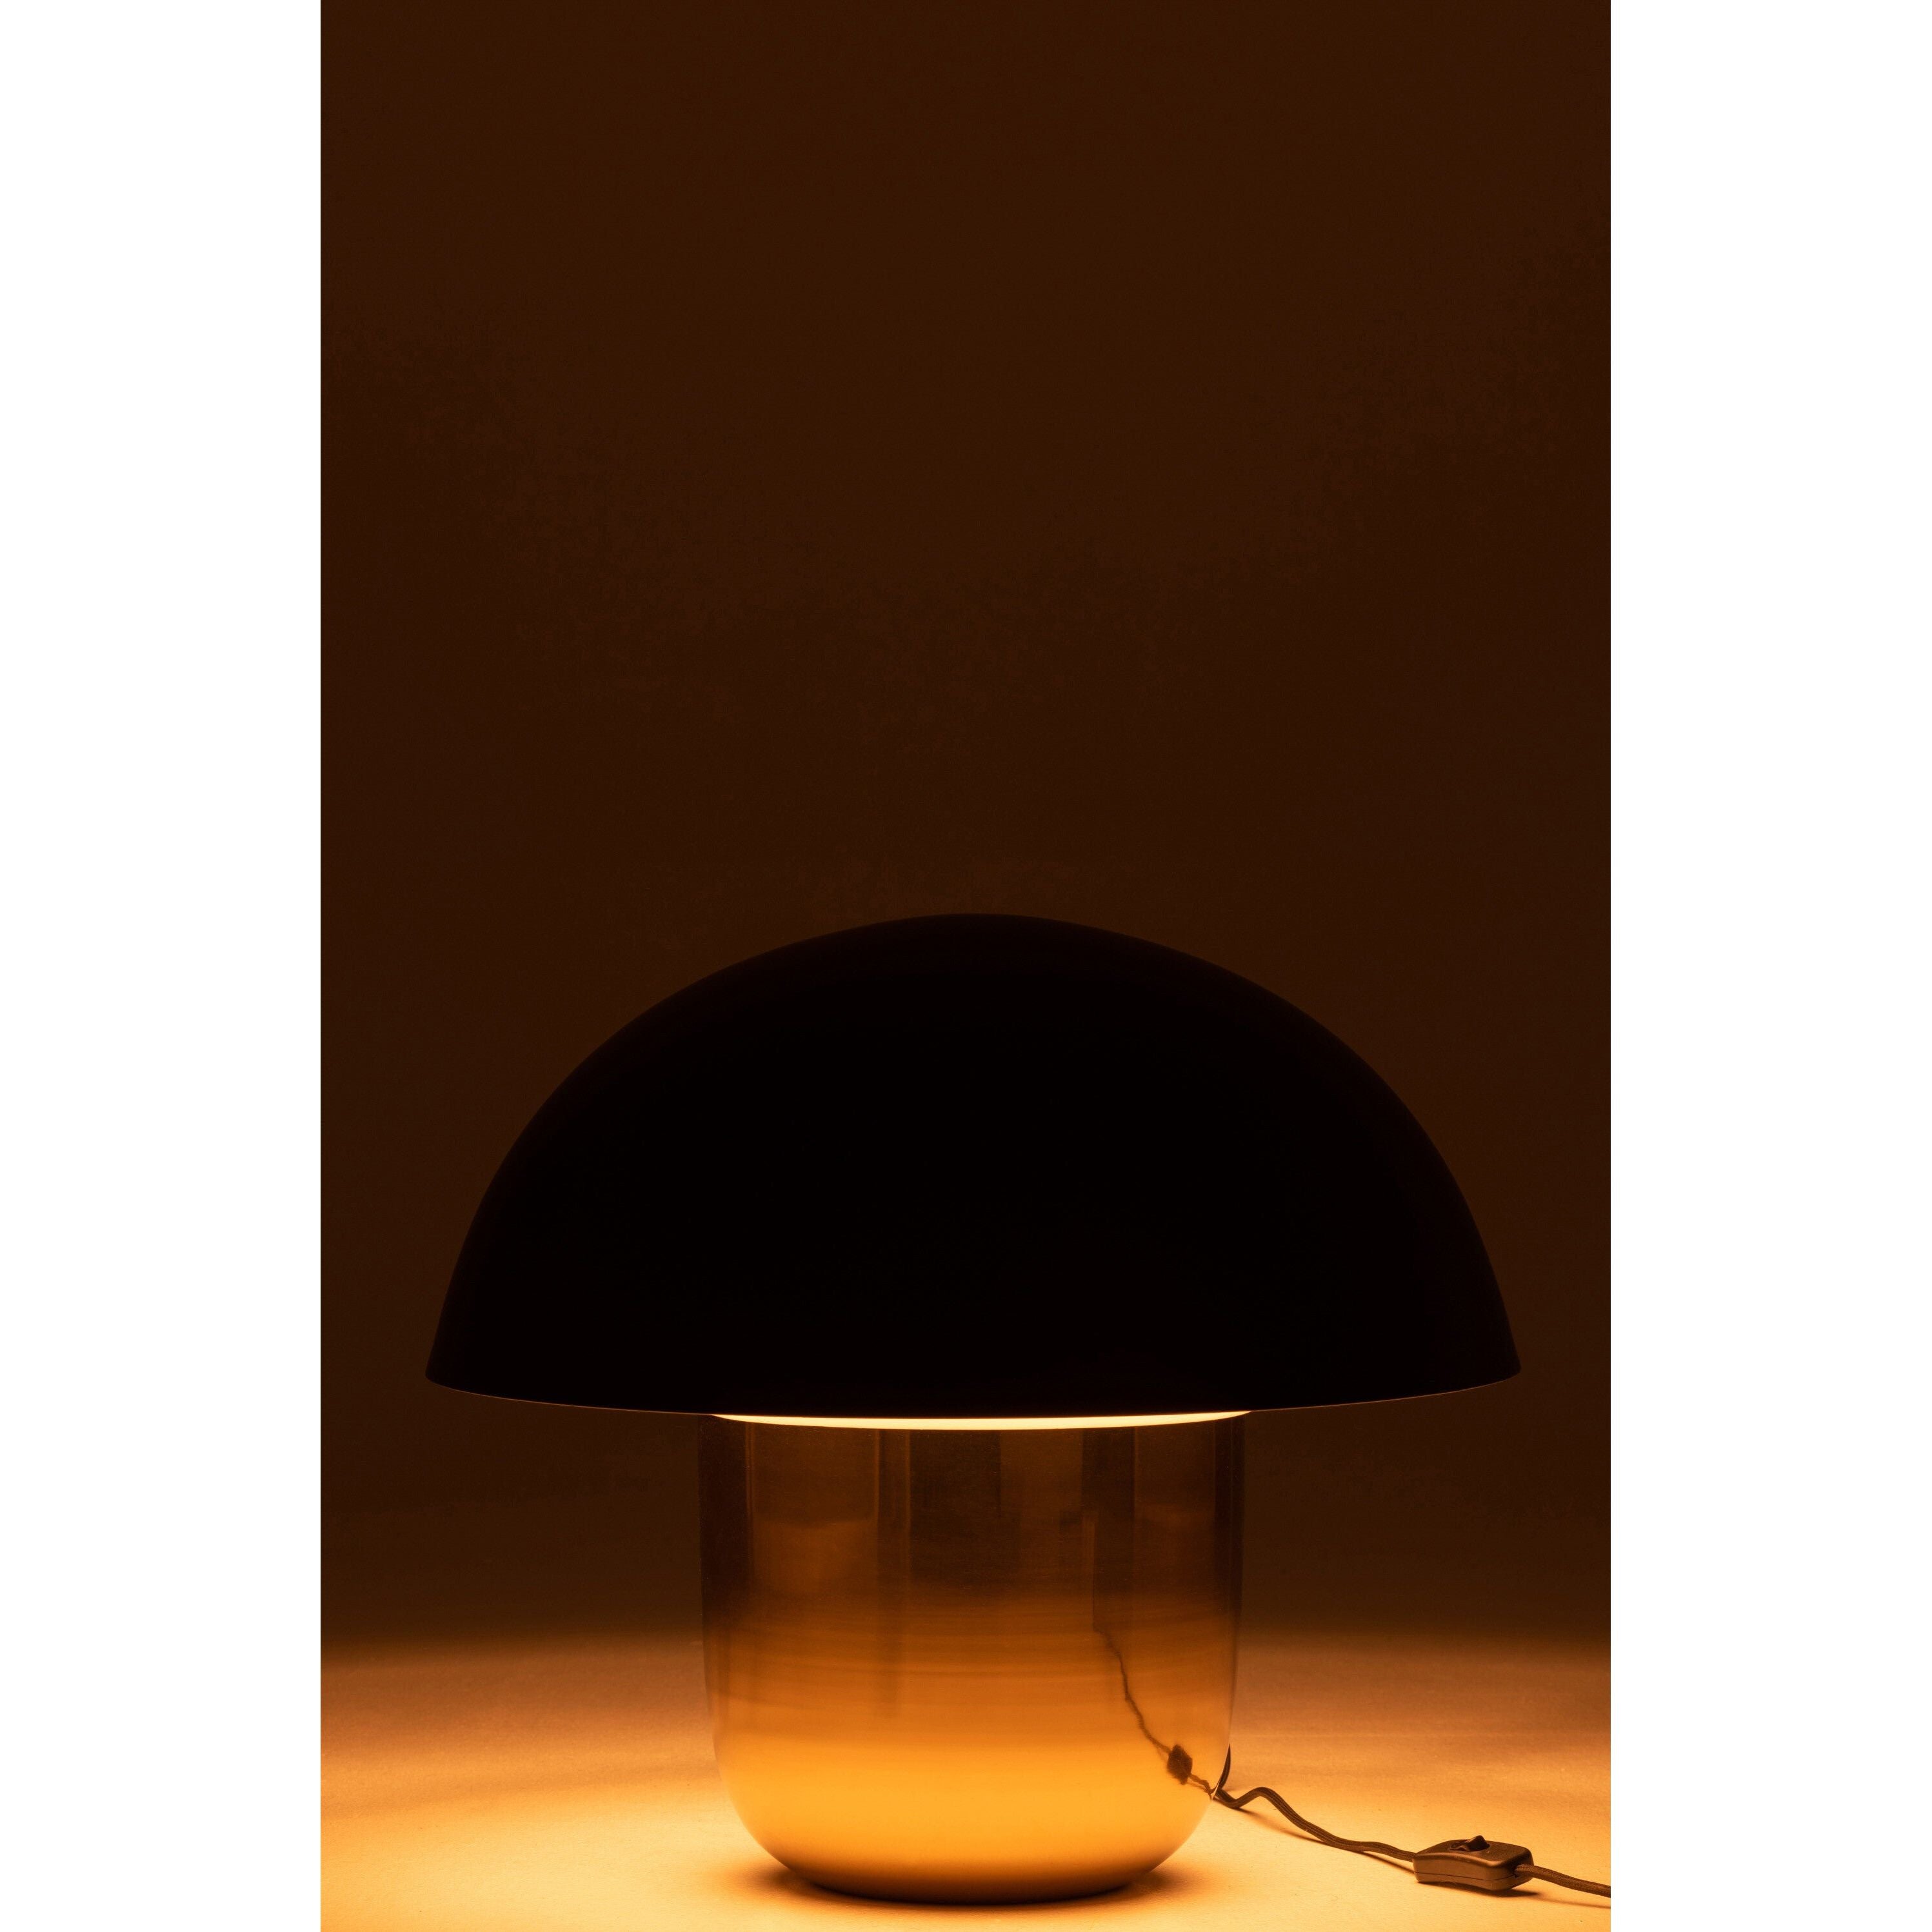 Lamp Mushroom Iron Black/gold Large